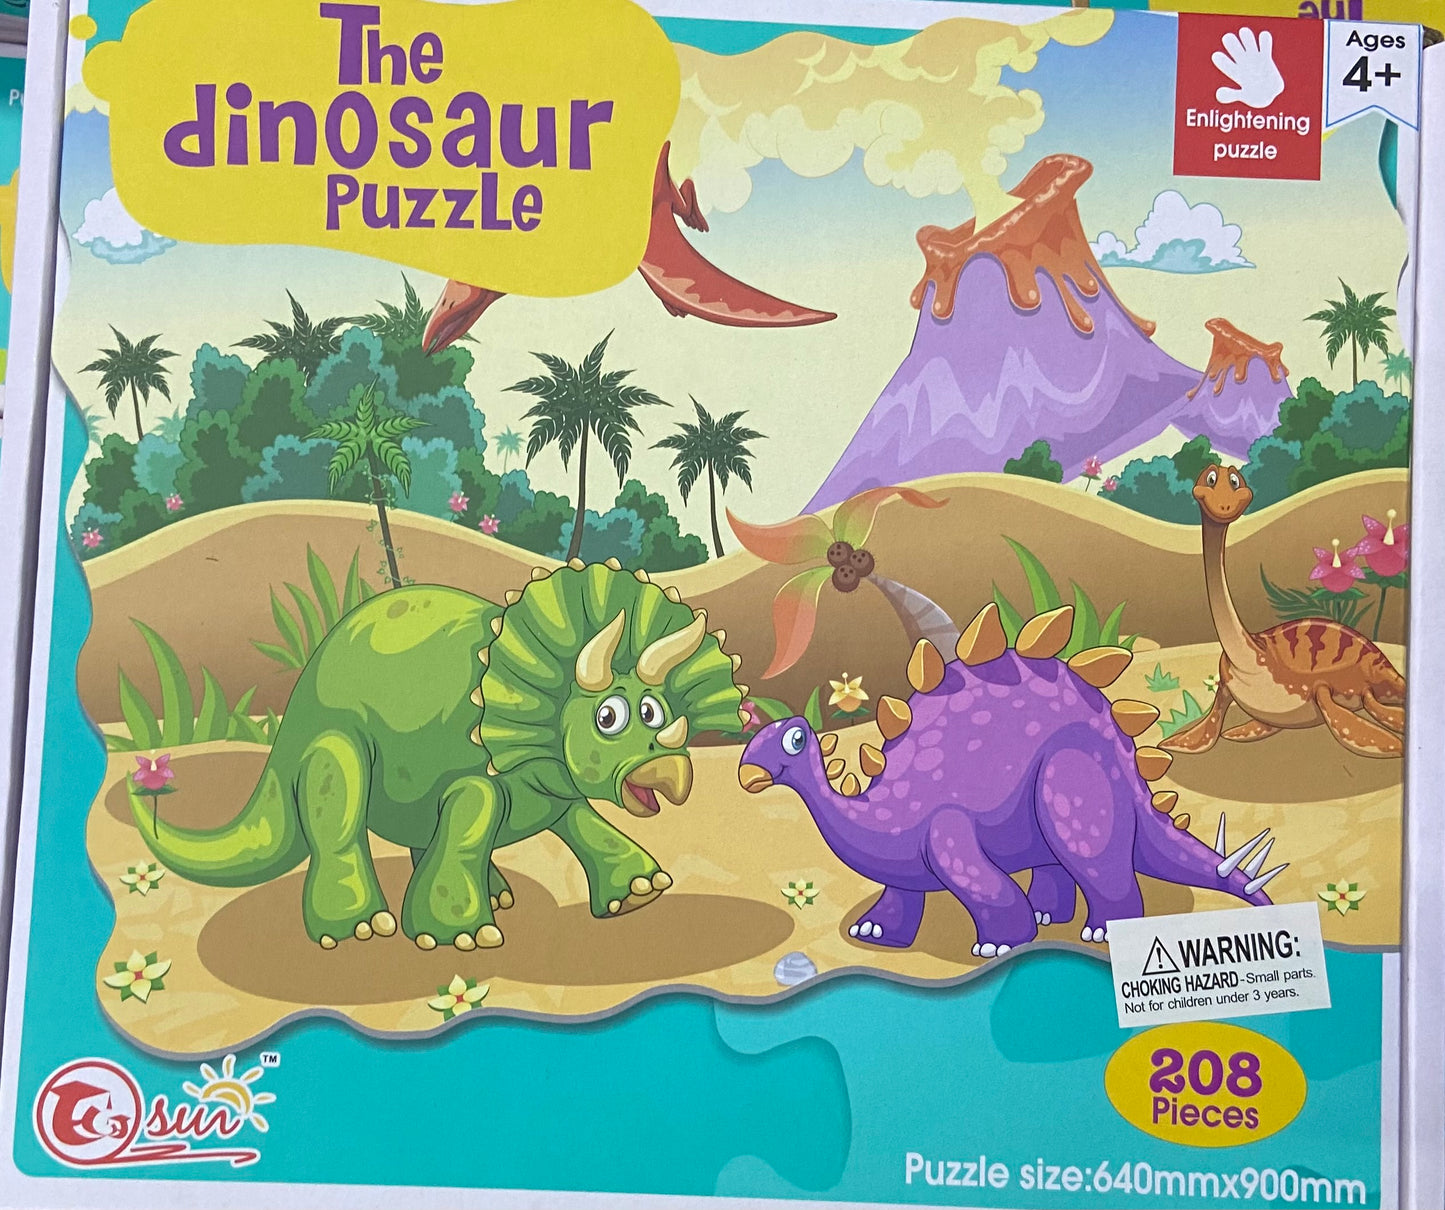 The Dinosaur Puzzle - 208 Pieces